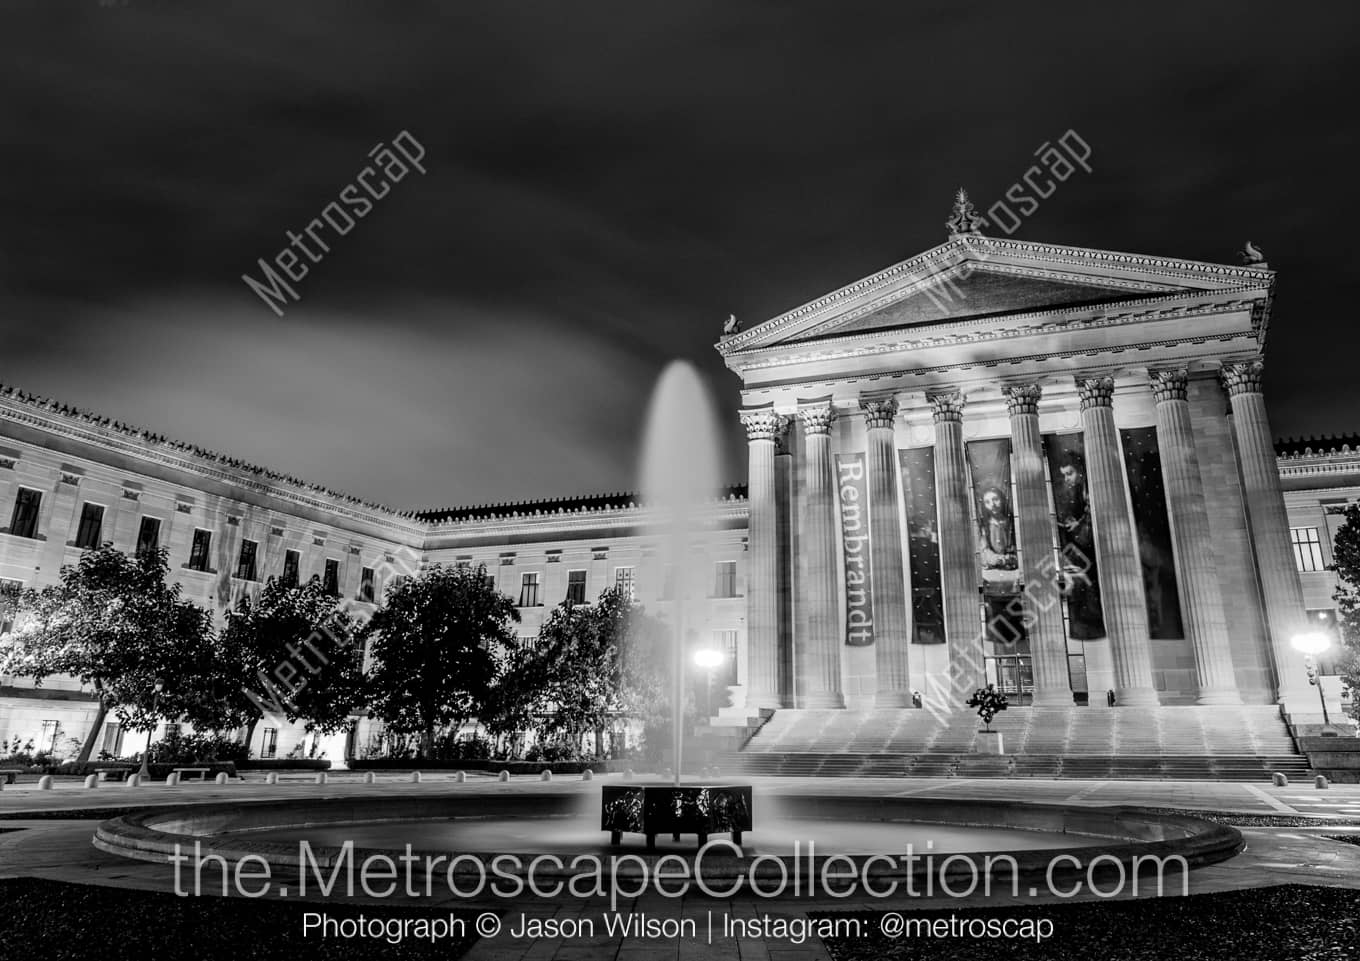 Philadelphia Pennsylvania Picture at Night